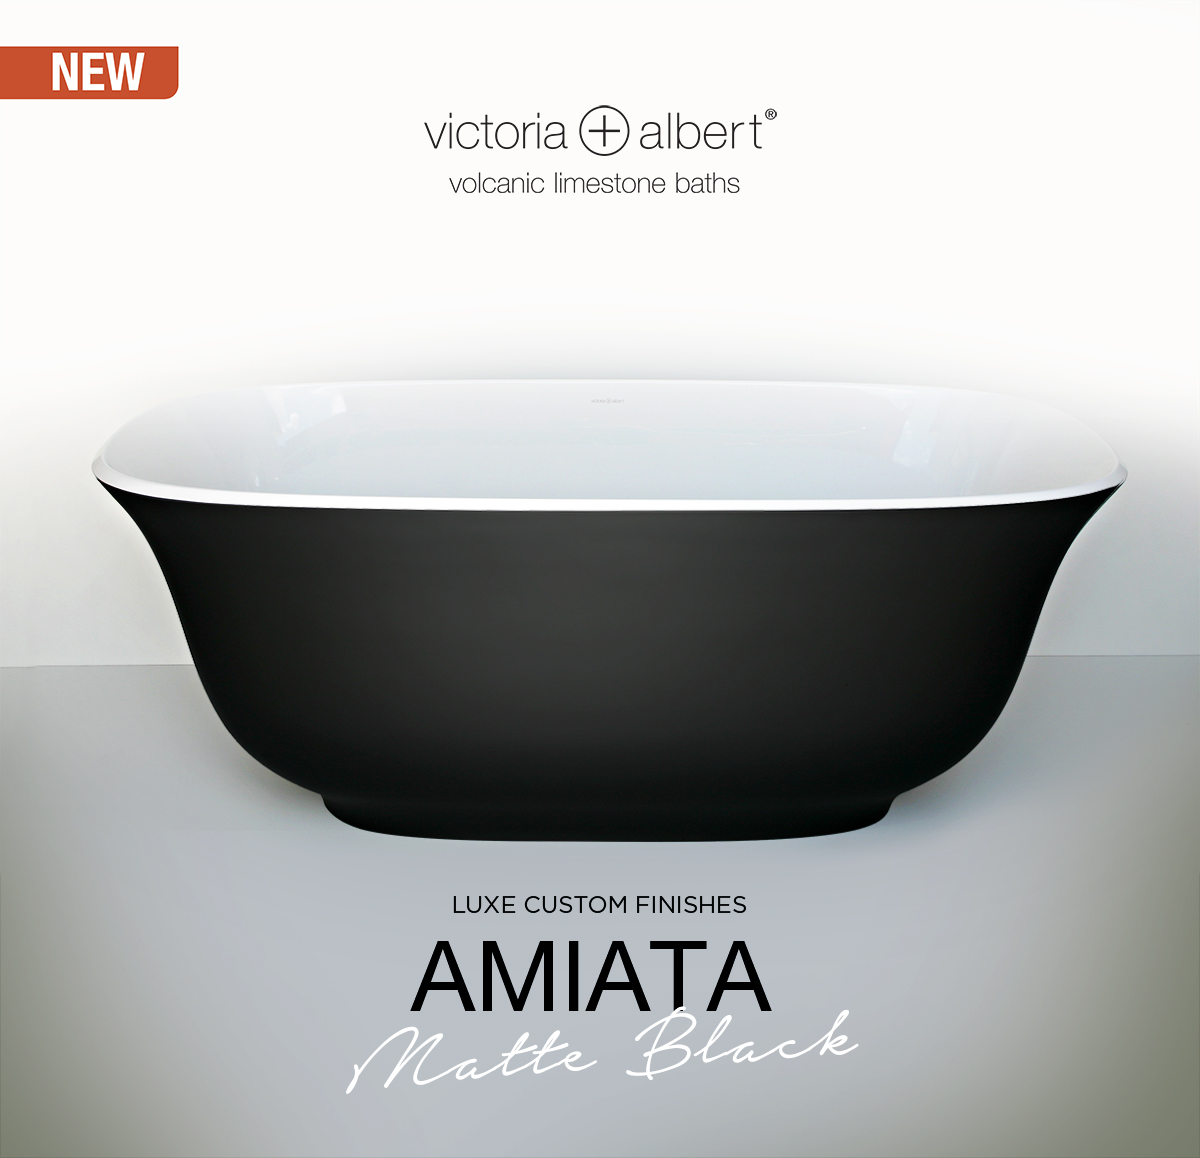 Victoria + Albert Amiata Matte Black custom painted bath by Luxe by Design, Brisbane.